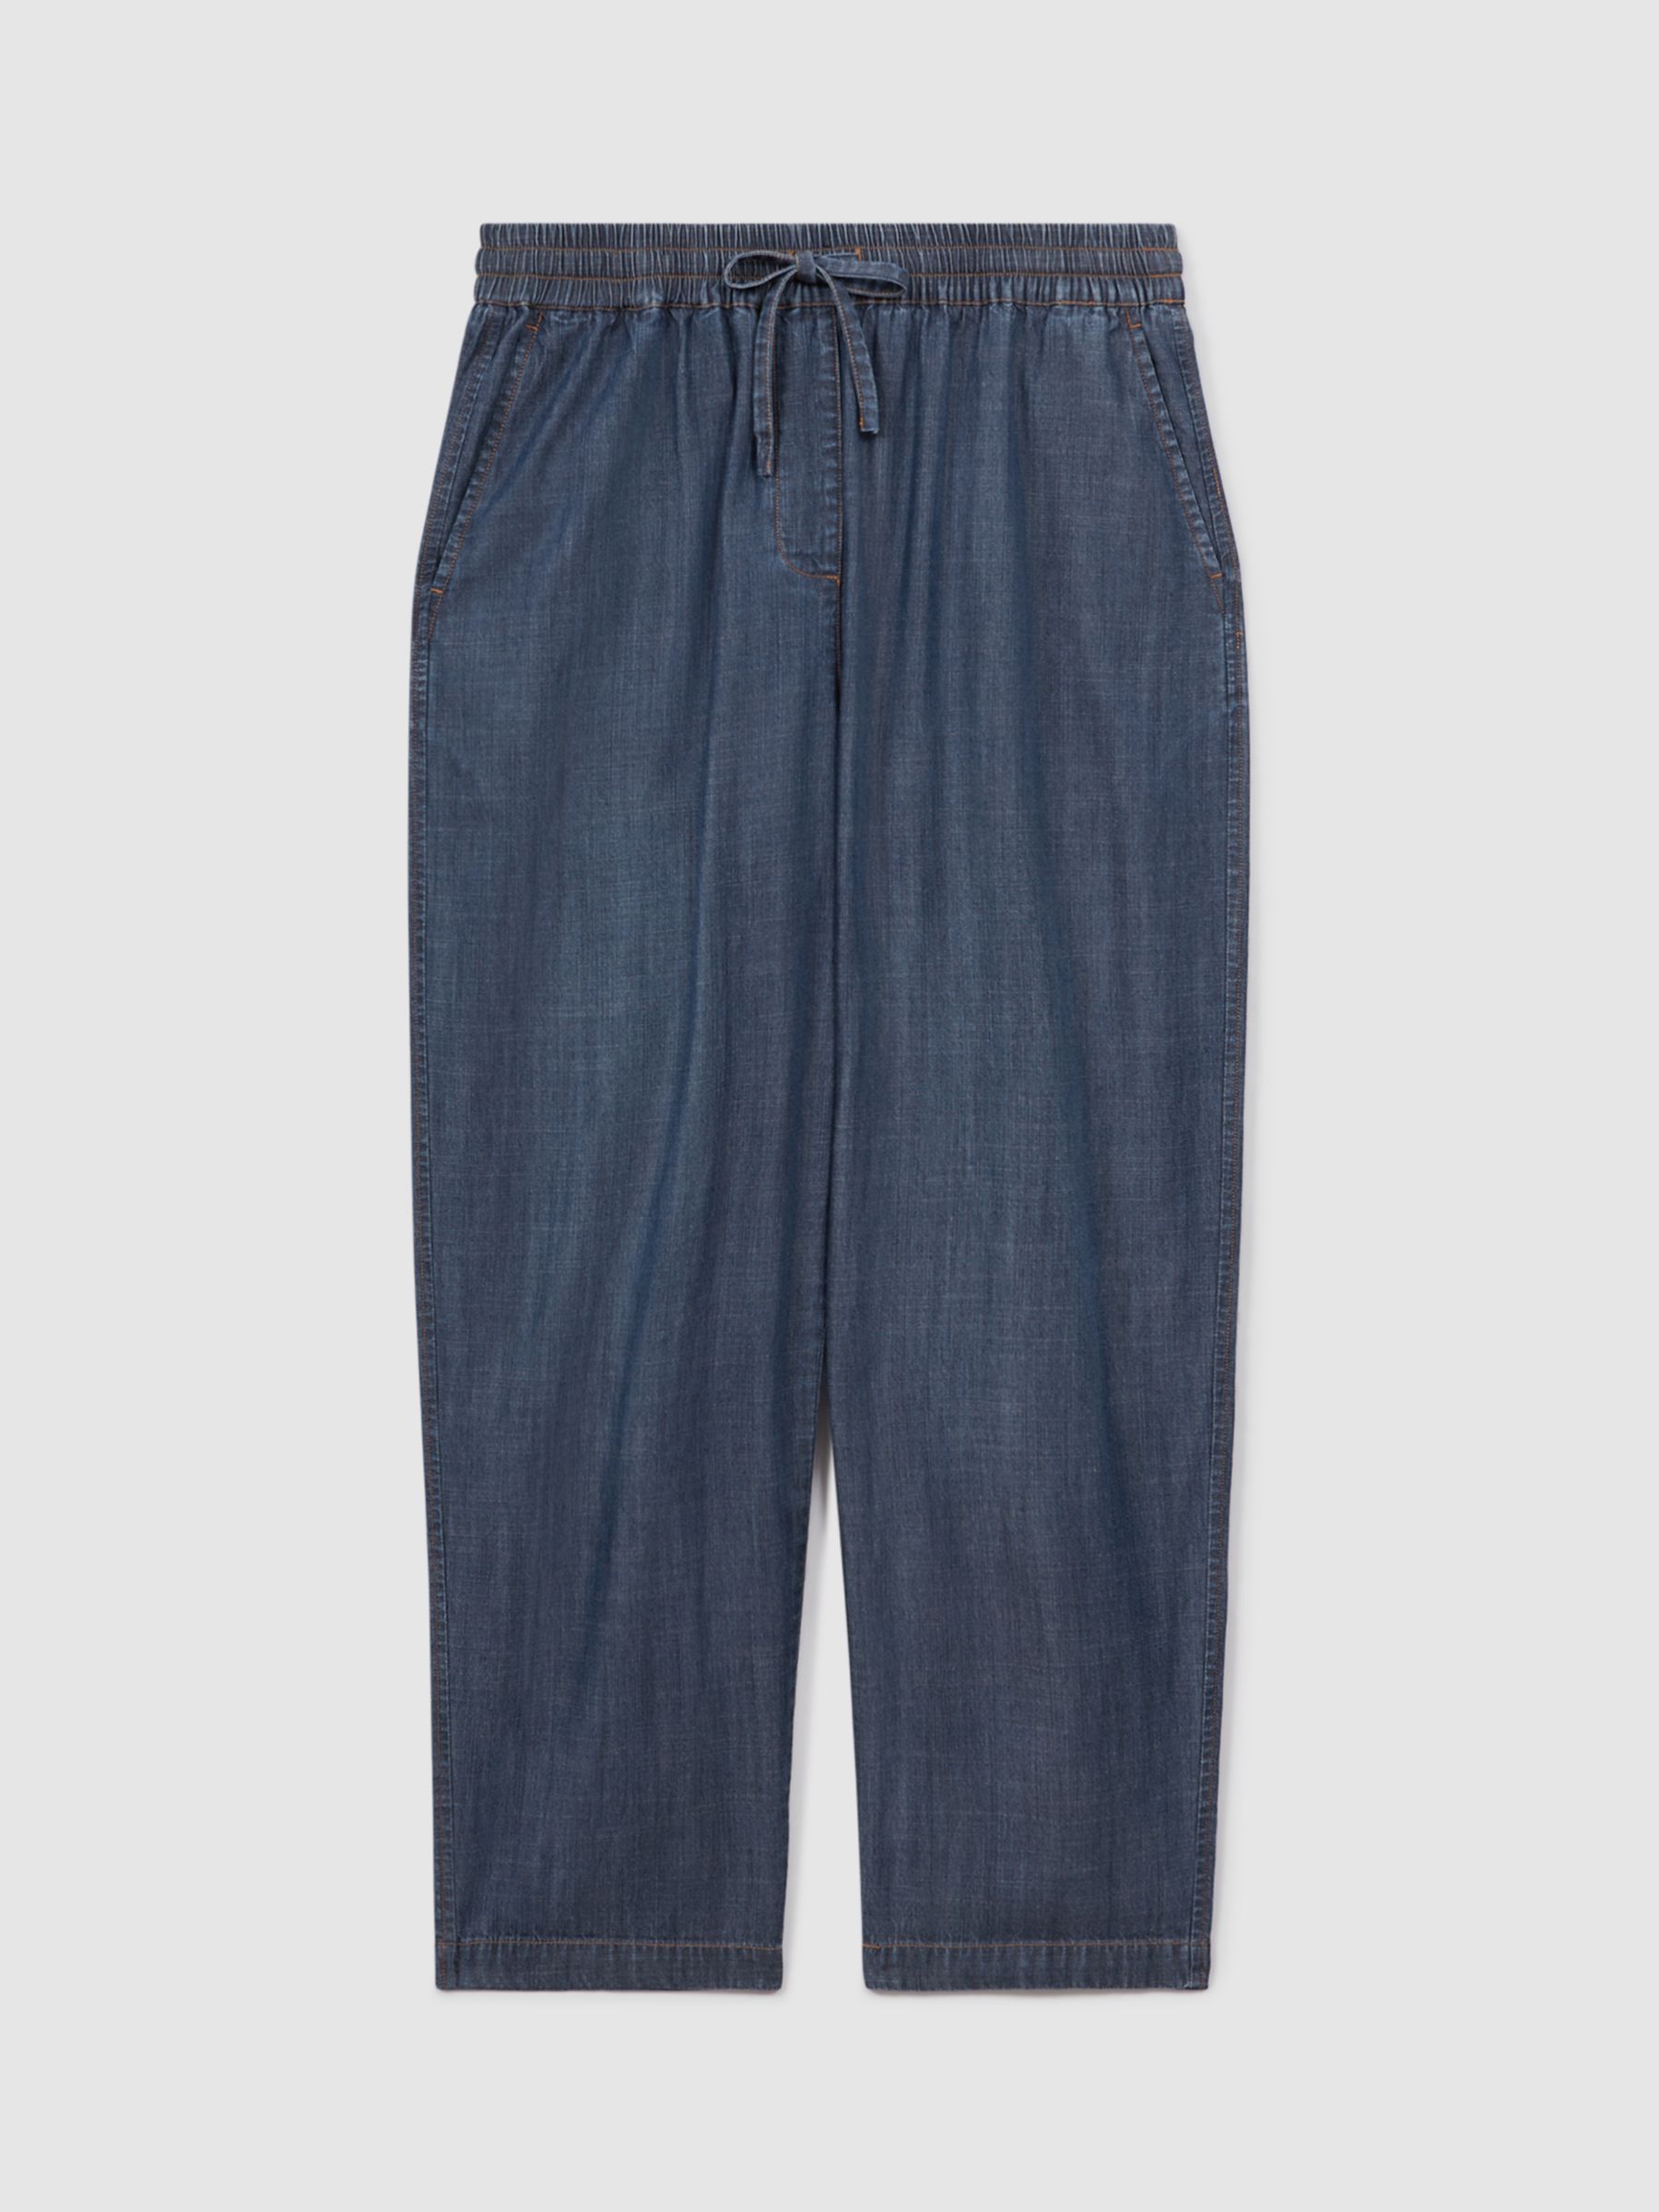 Buy Reiss Carter Denim Drawstring Waist Trousers, Mid Blue Online at johnlewis.com